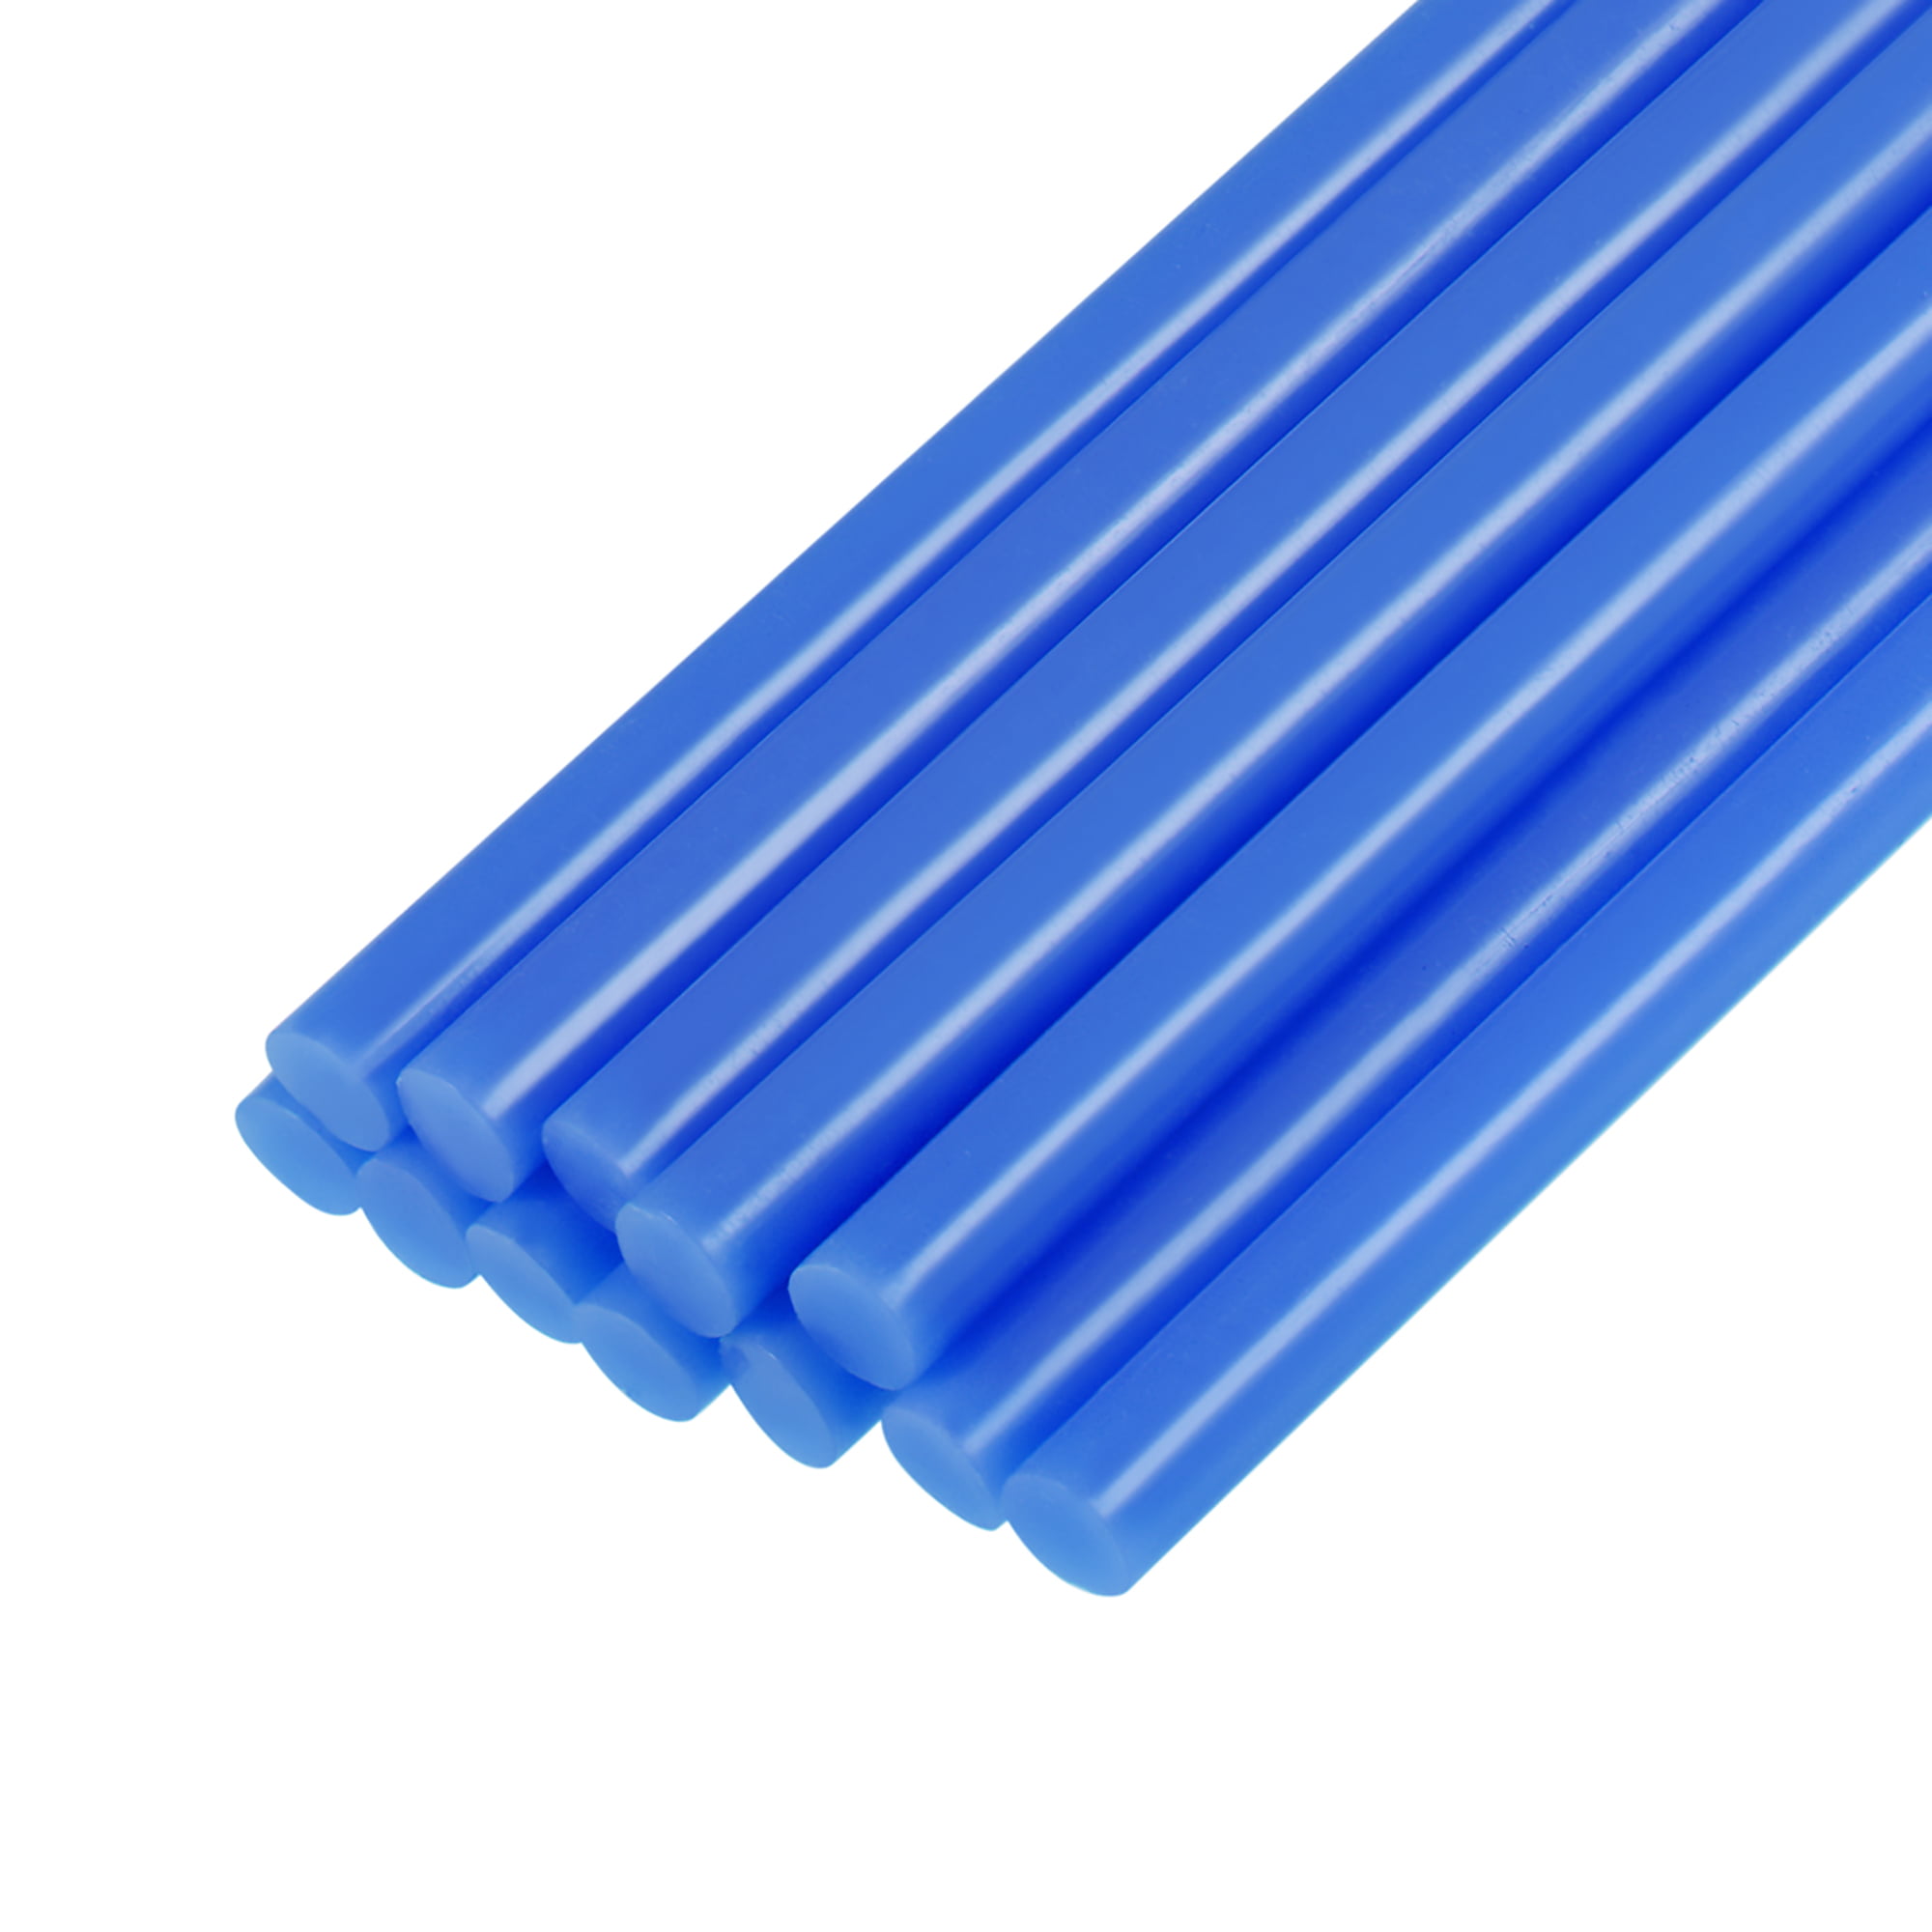 Light Blue Colored Hot Melt Glue Sticks by Infinity Bond